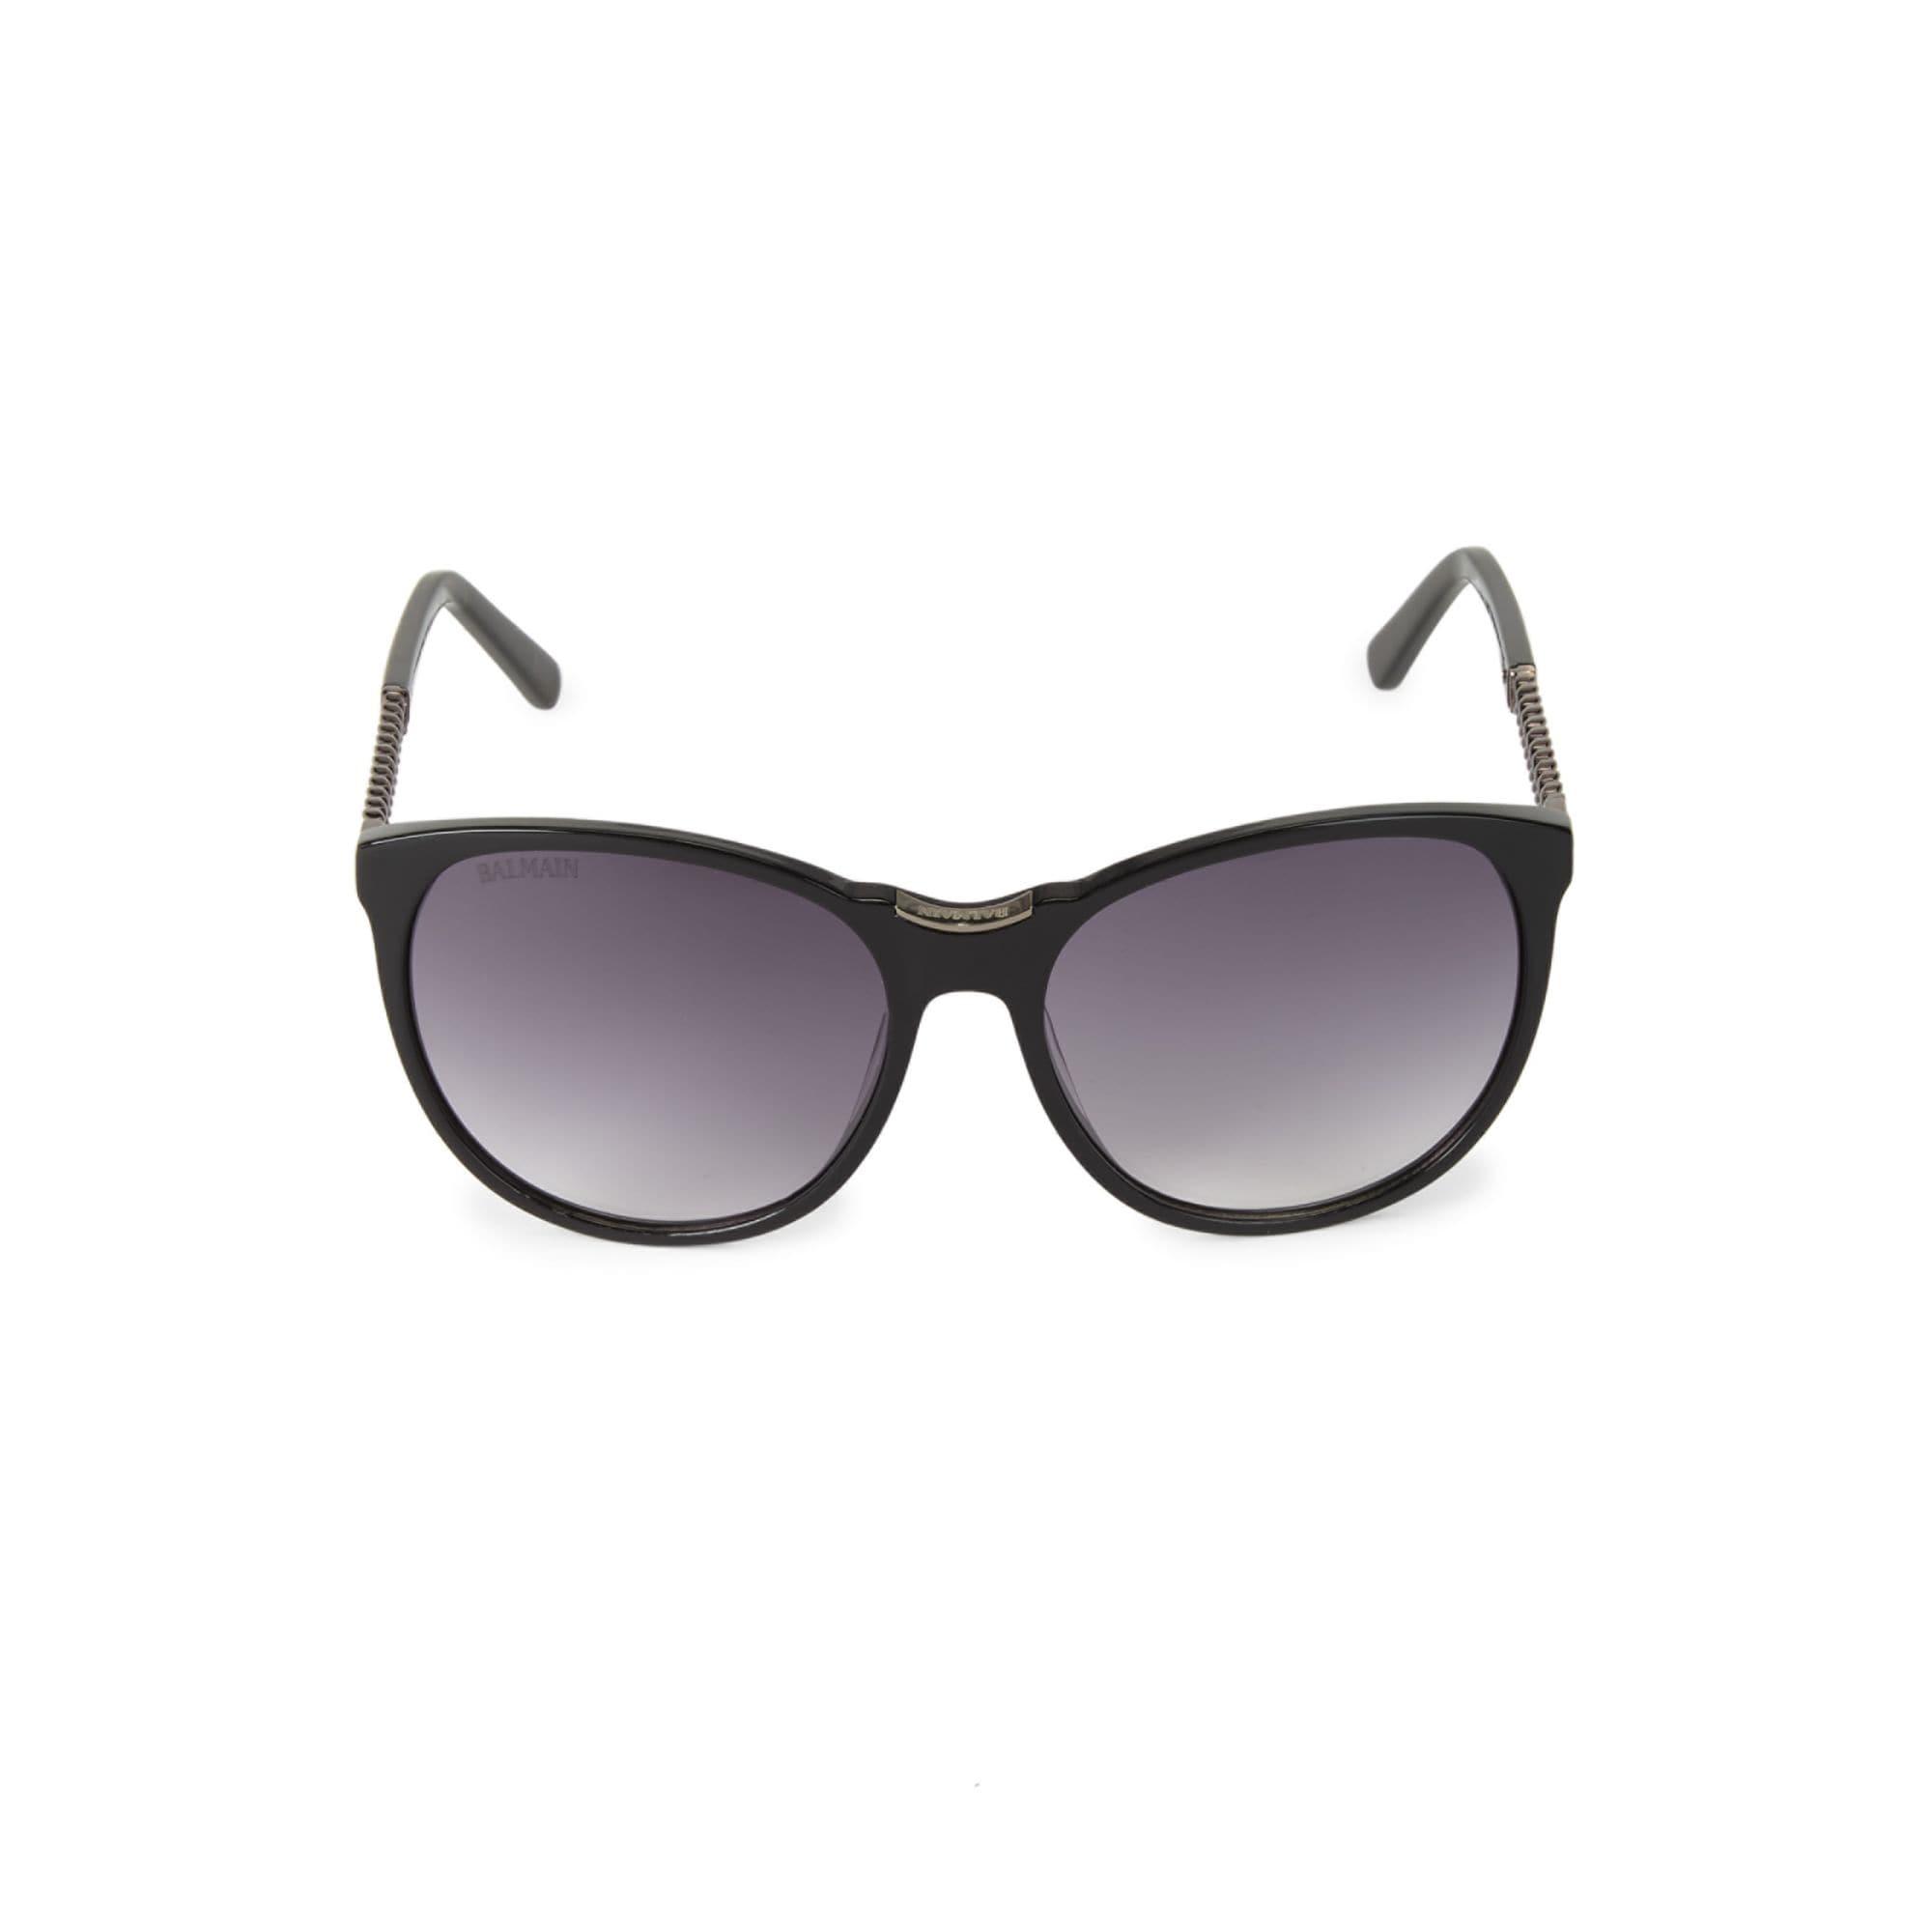 Balmain 58mm Square Sunglasses in Black - Lyst